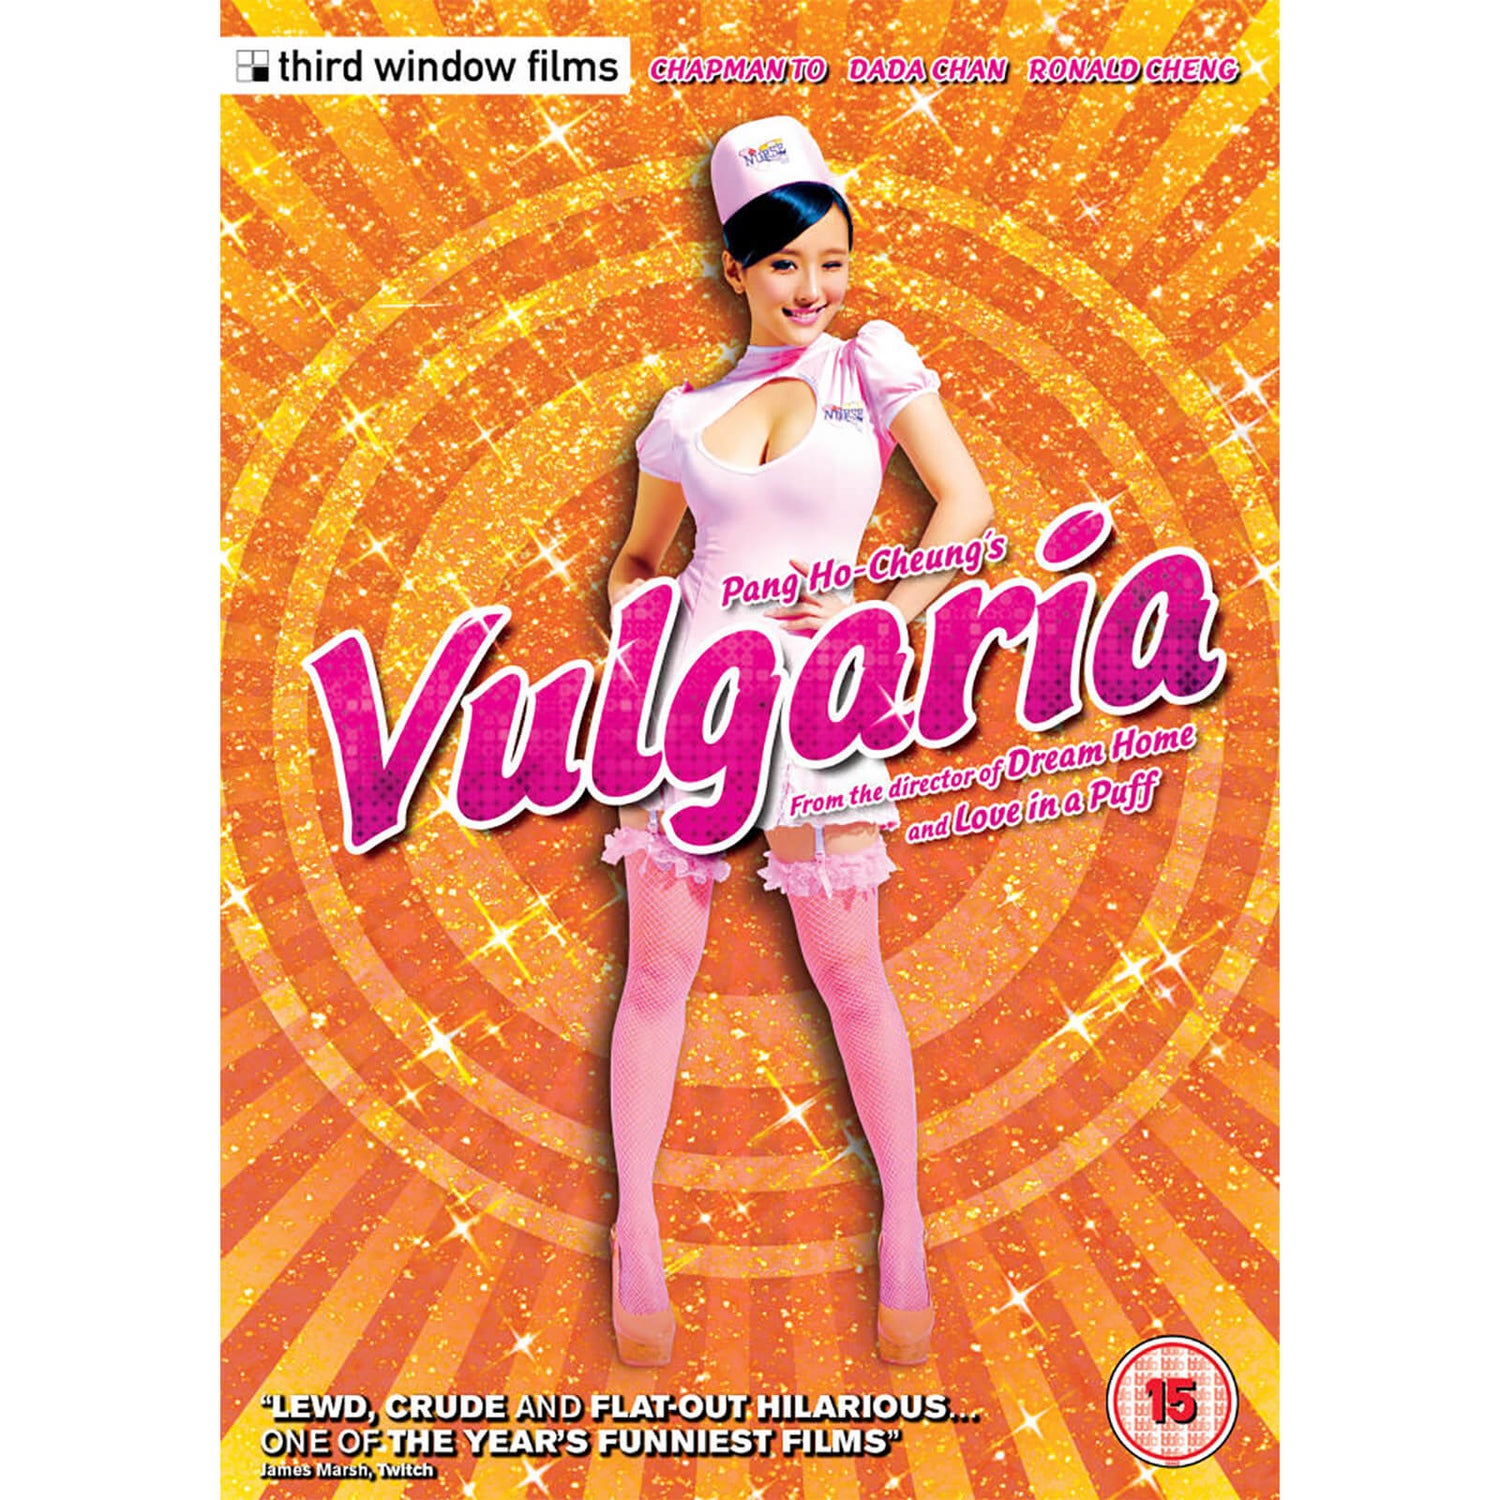 Vulgaria DVD